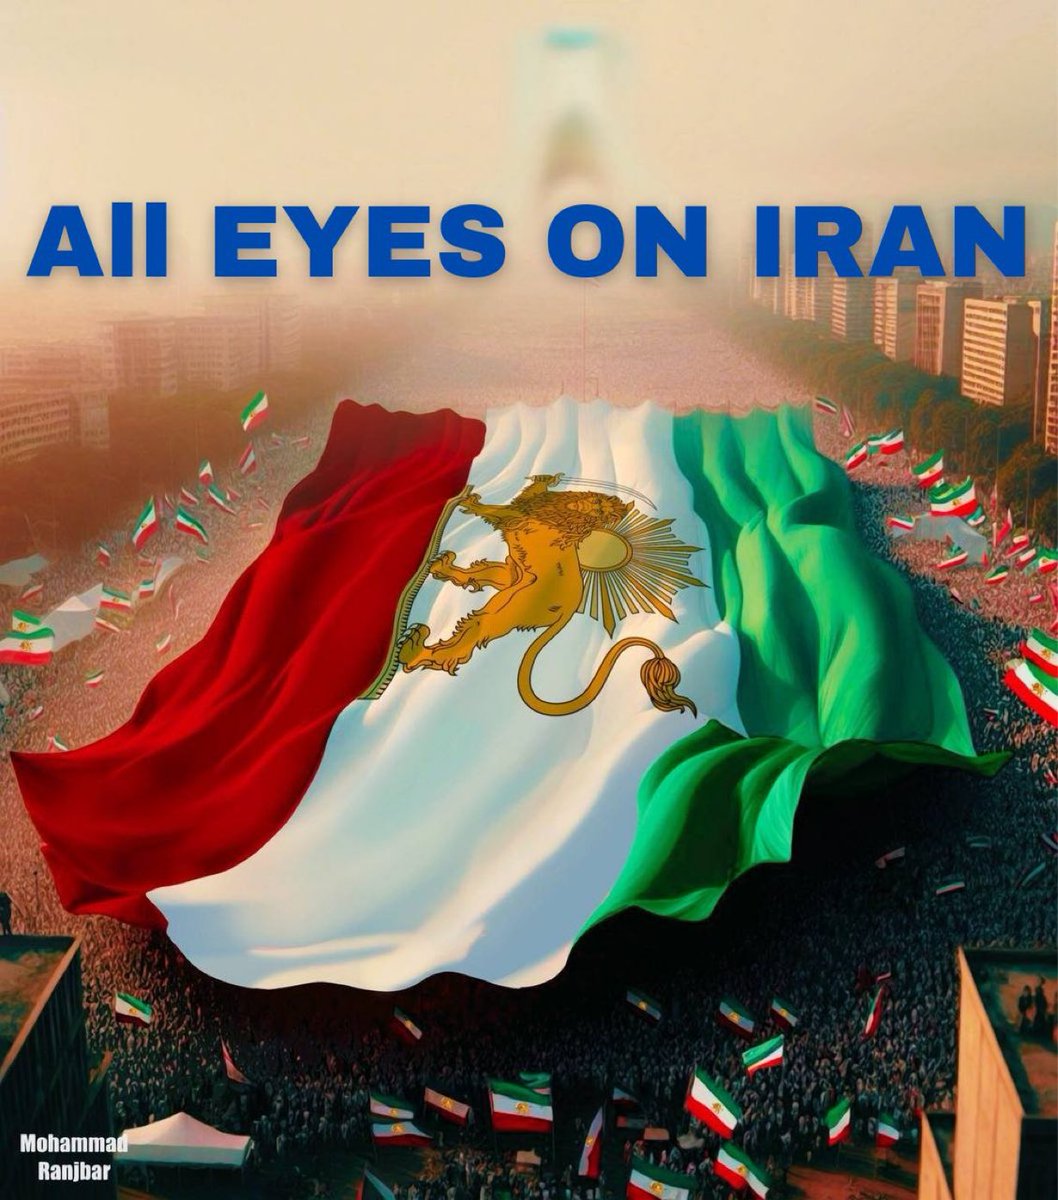 Listen All Jihadi Mullahs Of Iran 

#AllEyesOnIran